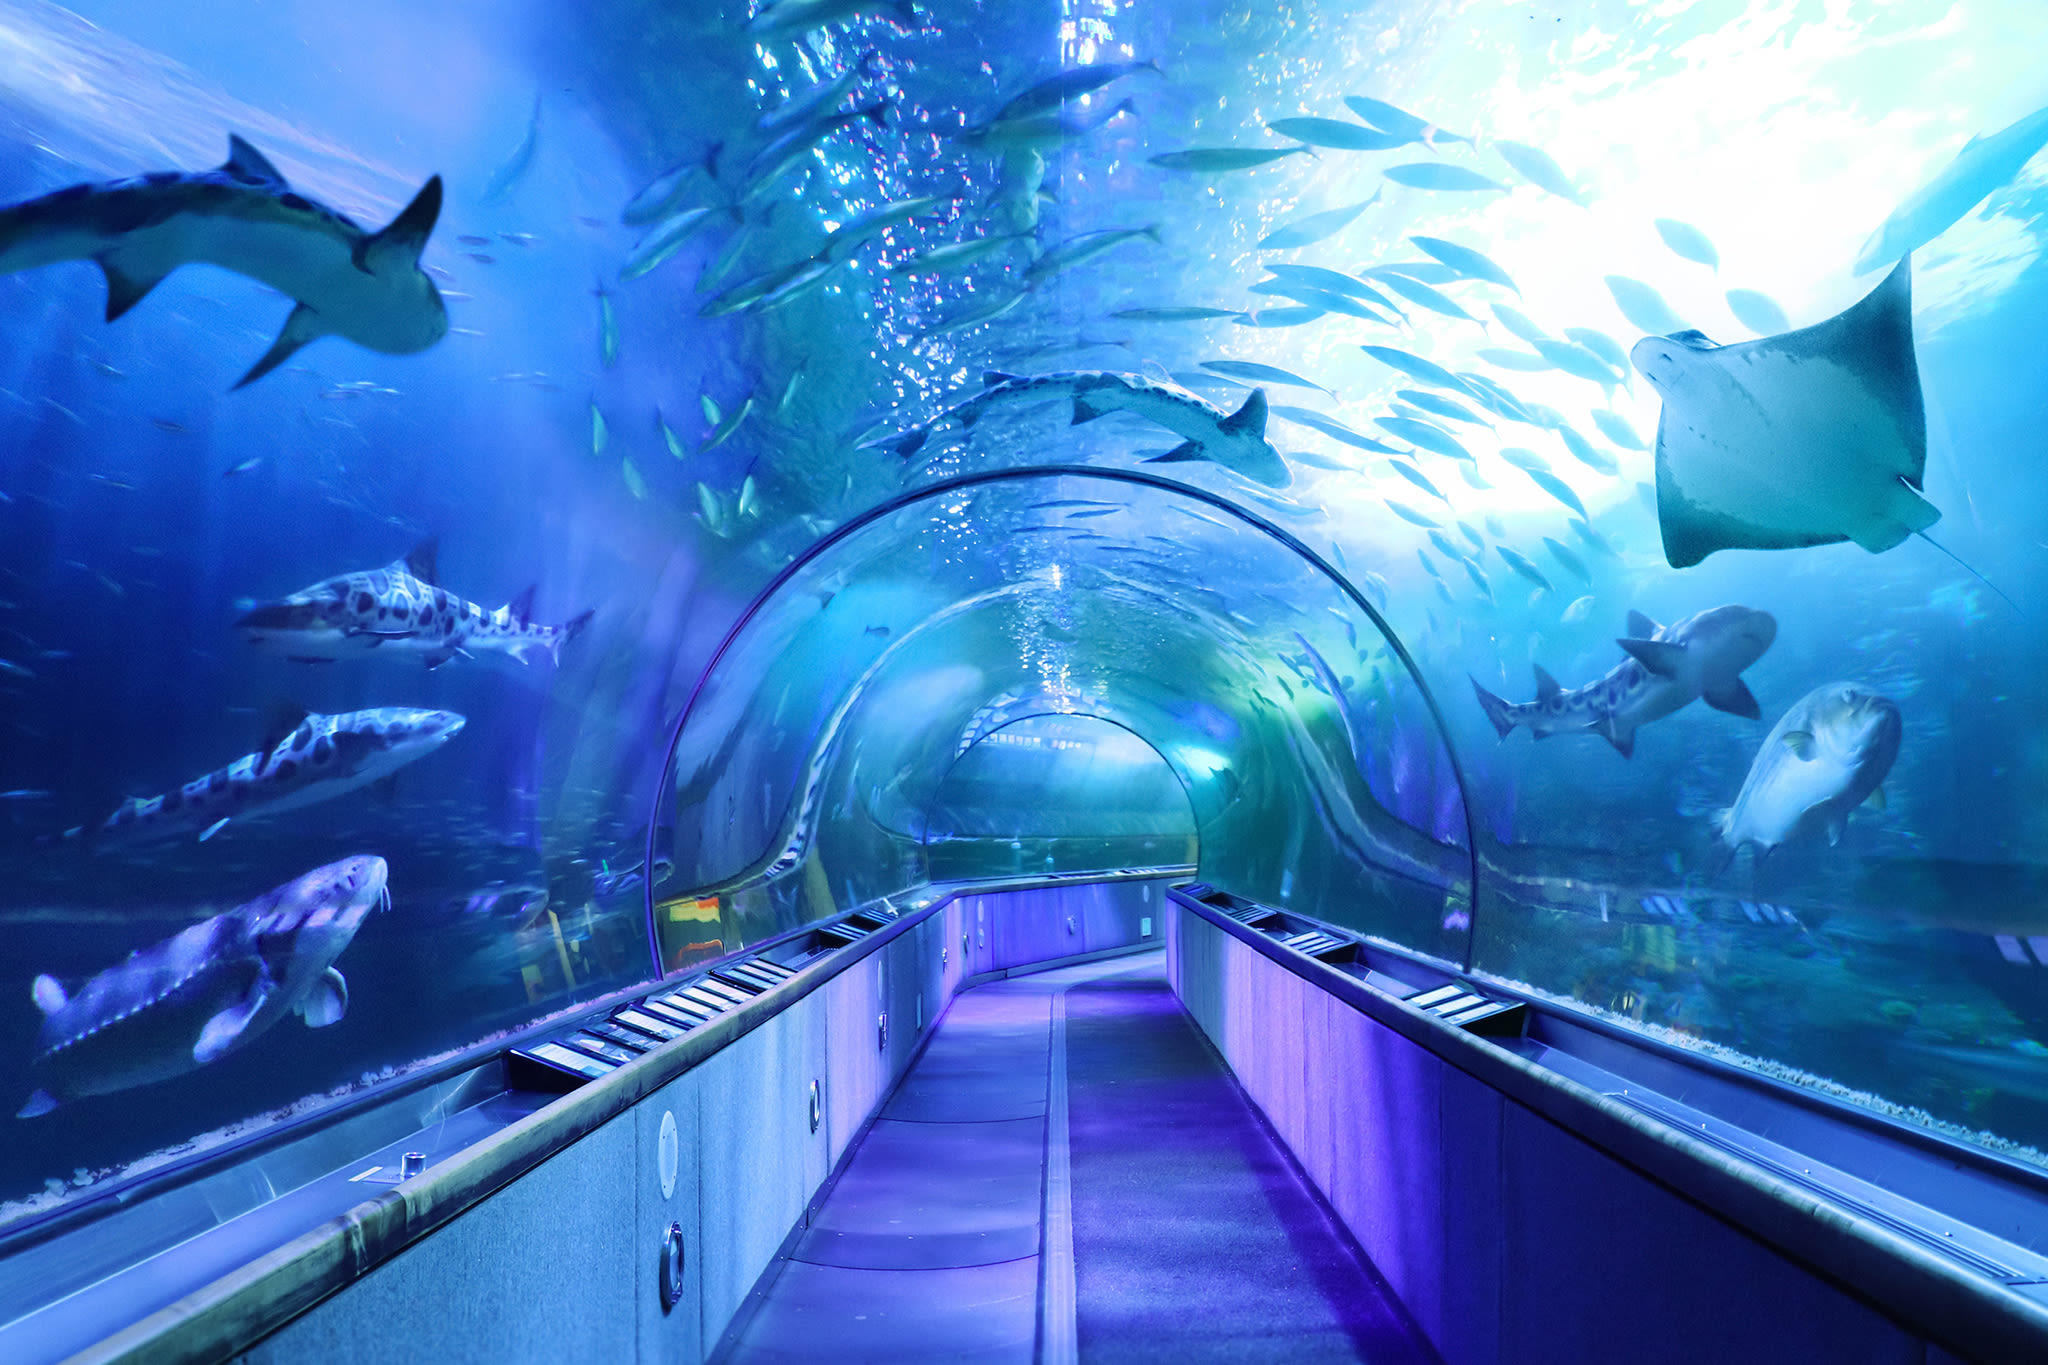 SF aquarium in upheaval as CEO exits amid accreditation loss